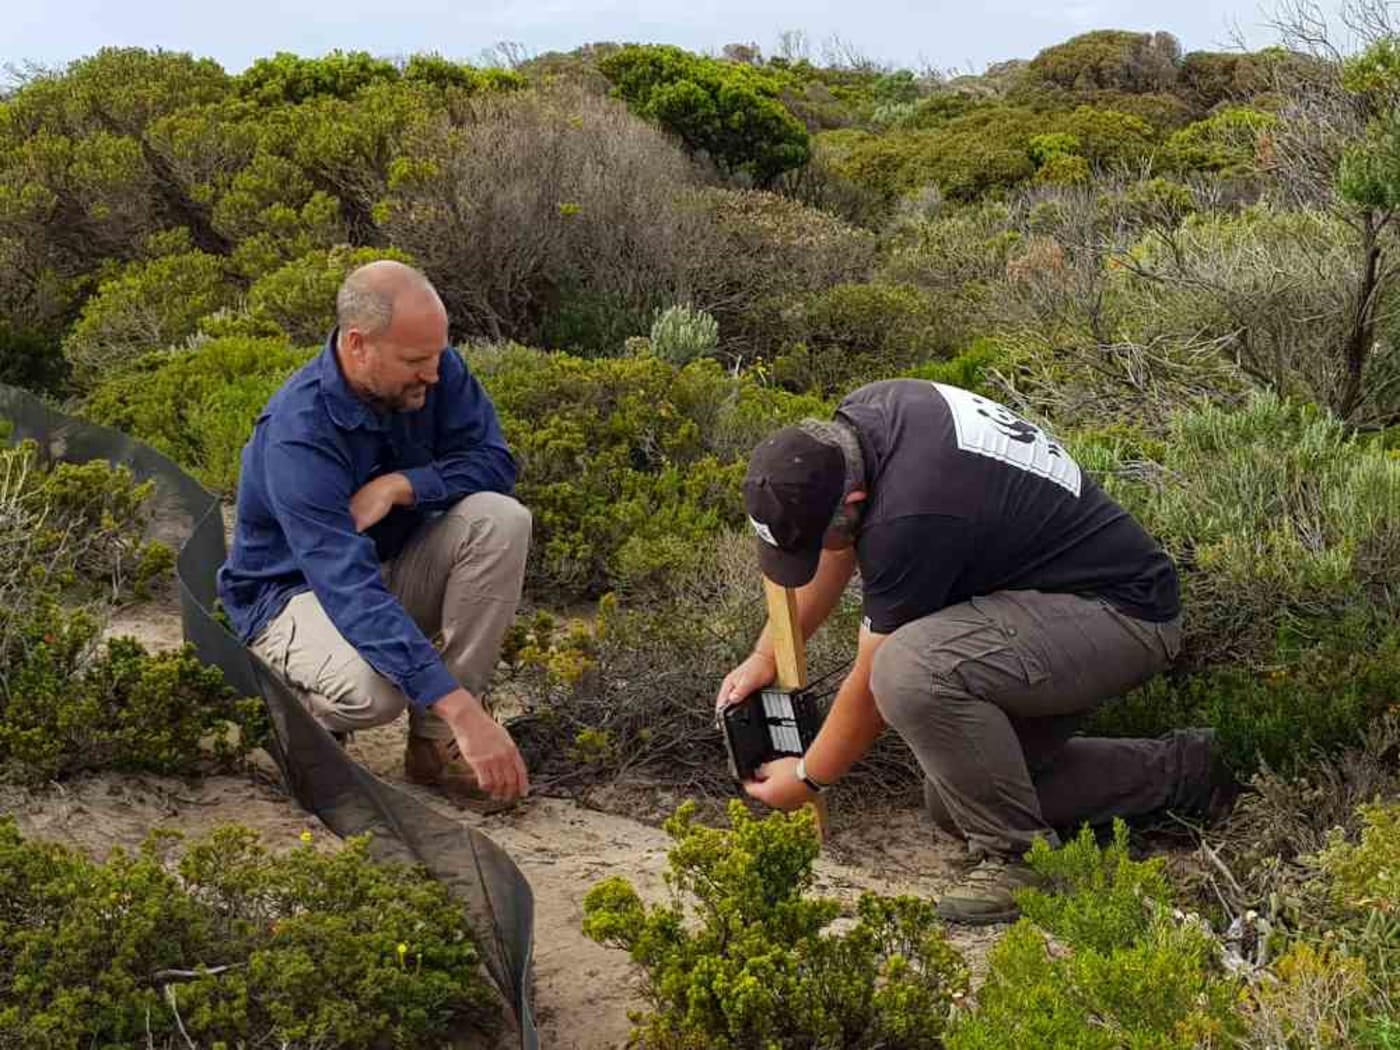 Installing sensor cameras on Kangaroo Island for An Eye on Recovery